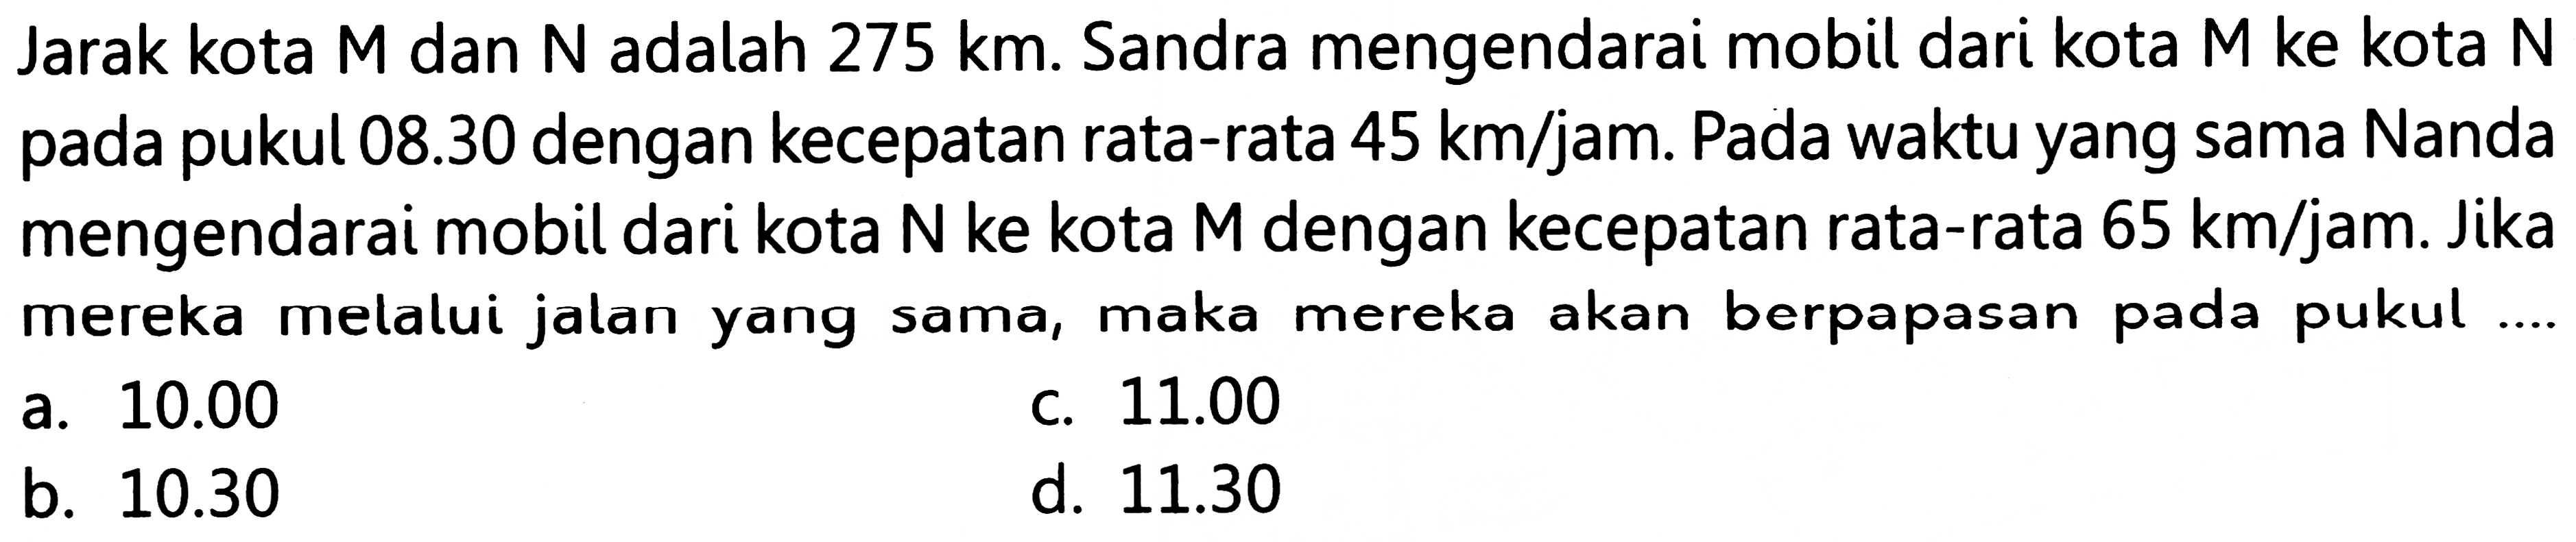 Jarak kota M dan  N  adalah 275 km. Sandra mengendarai mobil dari kota M ke kota N pada pukul  08.30  dengan kecepatan rata-rata  45 ~km / jam . Pada waktu yang sama Nanda mengendarai mobil dari kota  N  ke kota M dengan kecepatan rata-rata  65 ~km / jam . Jika mereka melalui jalan yang sama, maka mereka akan berpapasan pada pukul ...
a.  10.00 
c.  11.00 
b.  10.30 
d.  11.30 